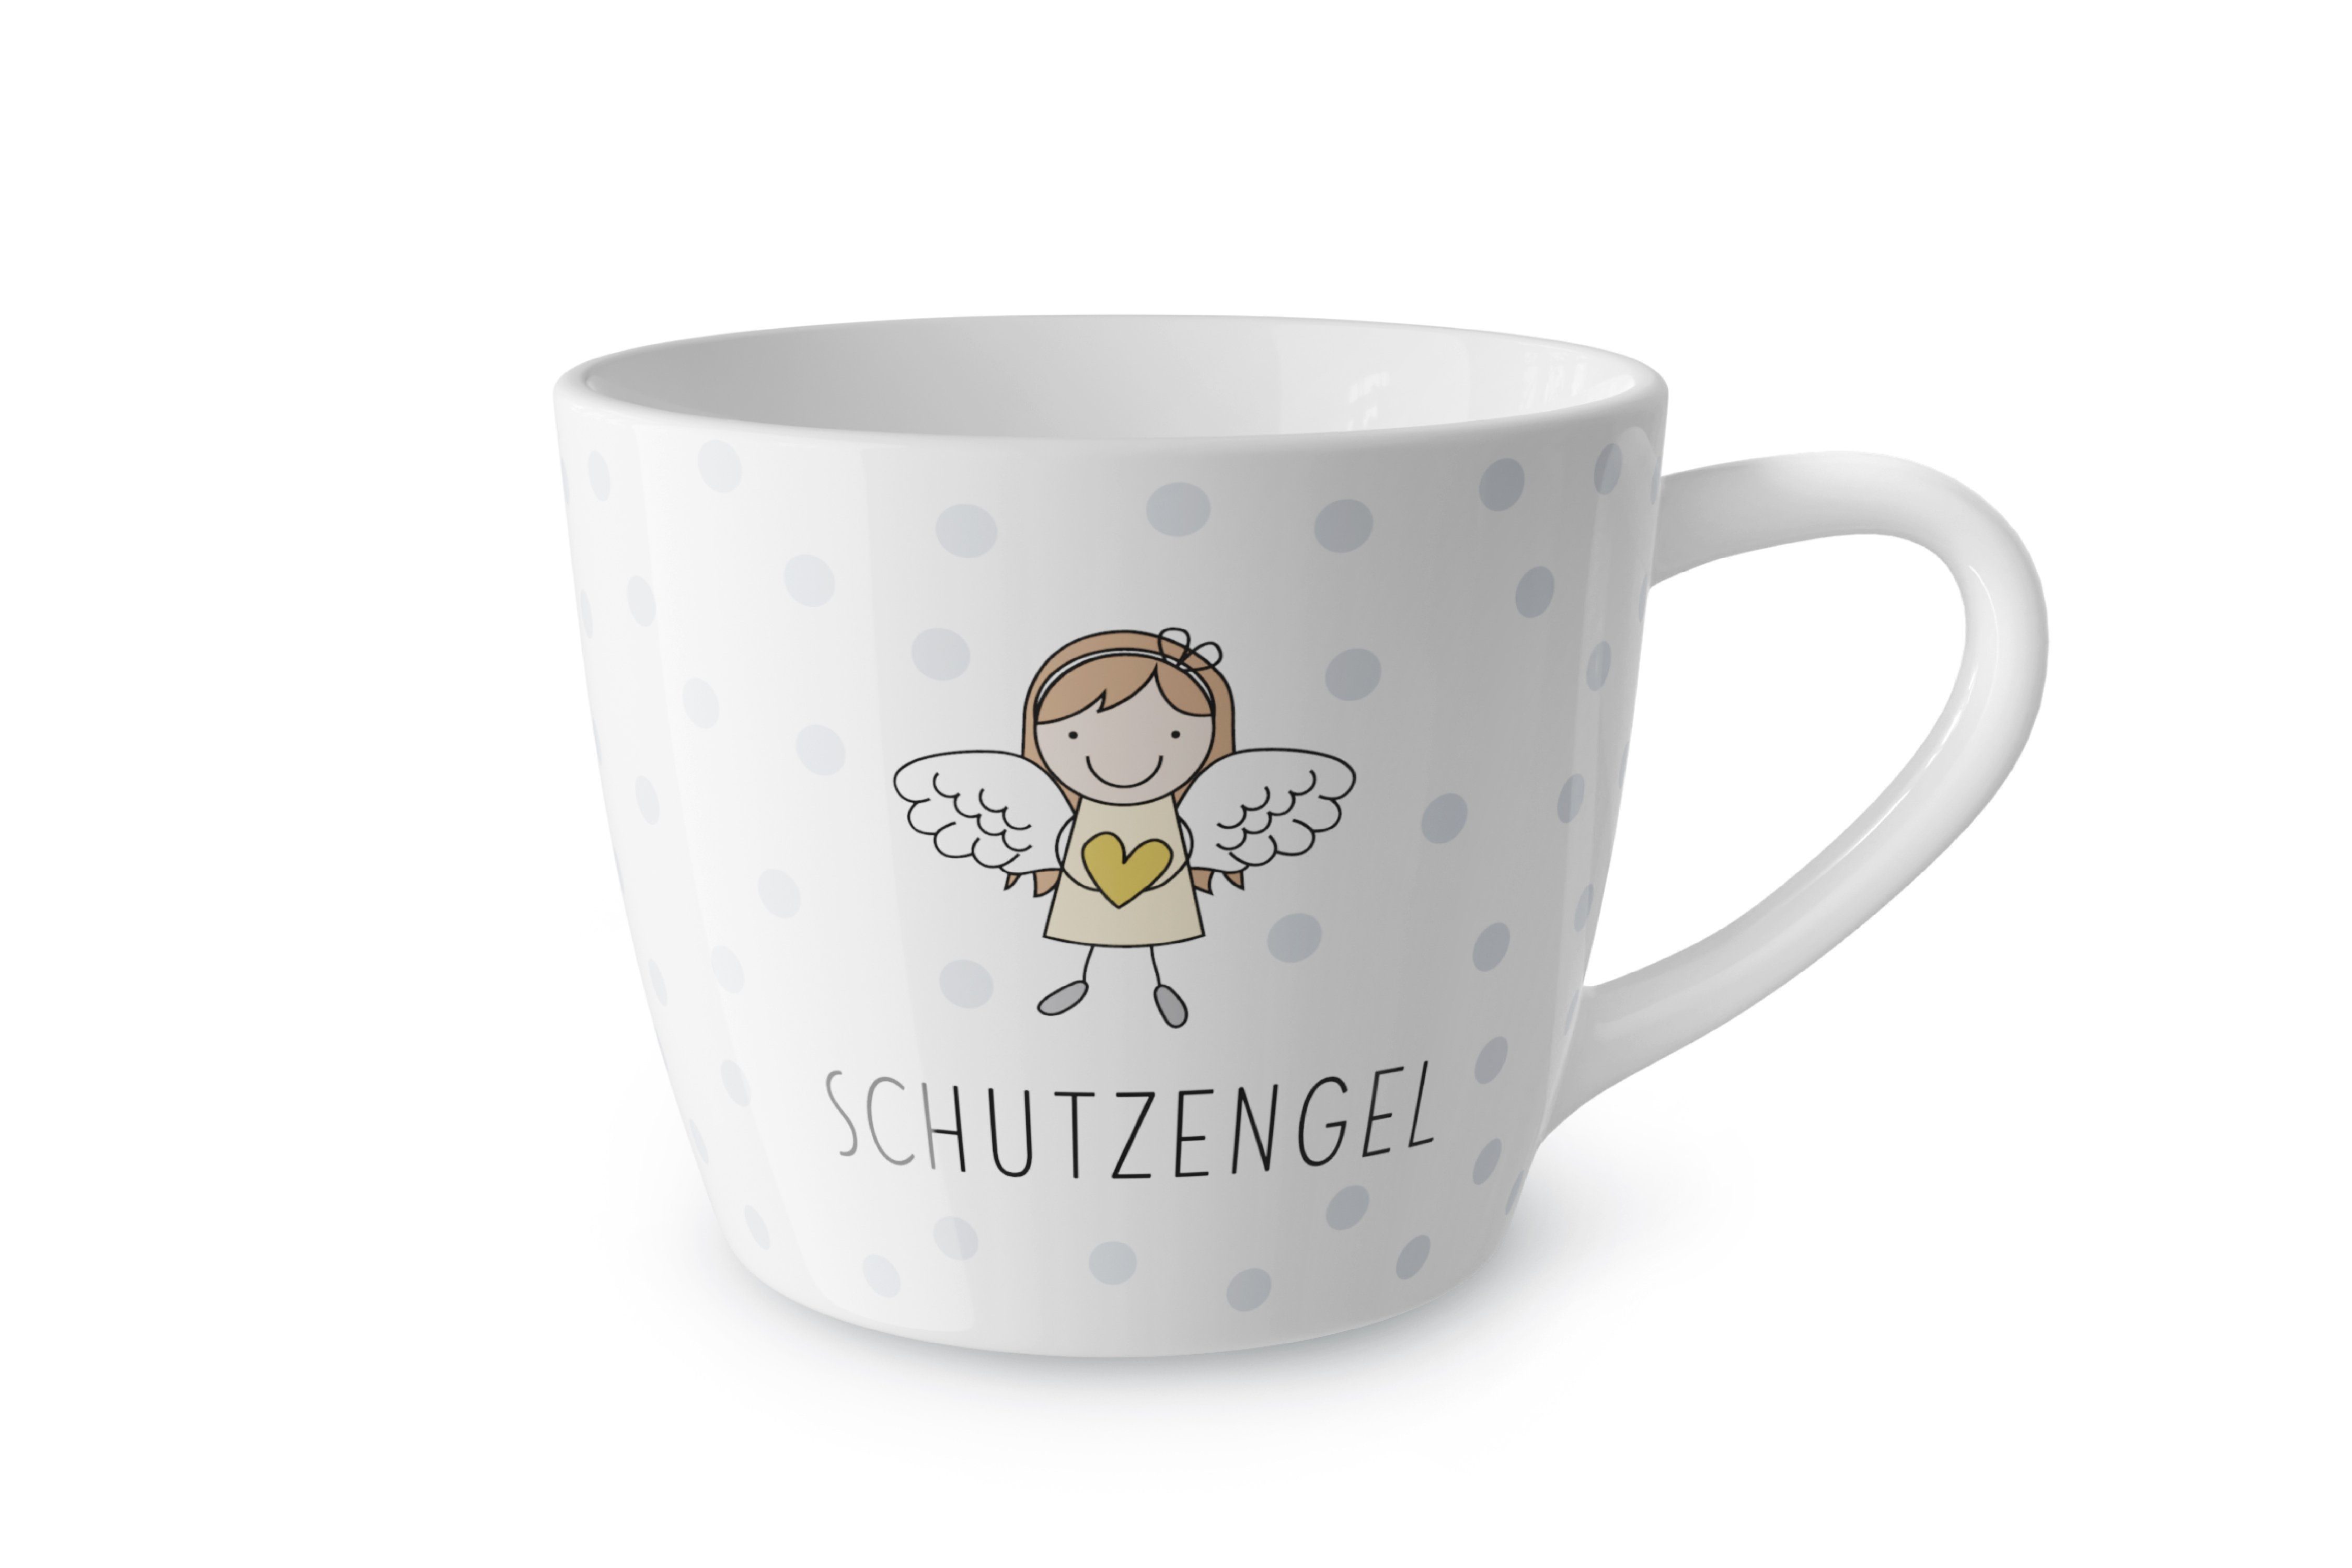 La Vida Tasse Kaffeetasse Teetasse Tasse Maxi Becher für dich la vida "Schutzengel", Material: Porzellan